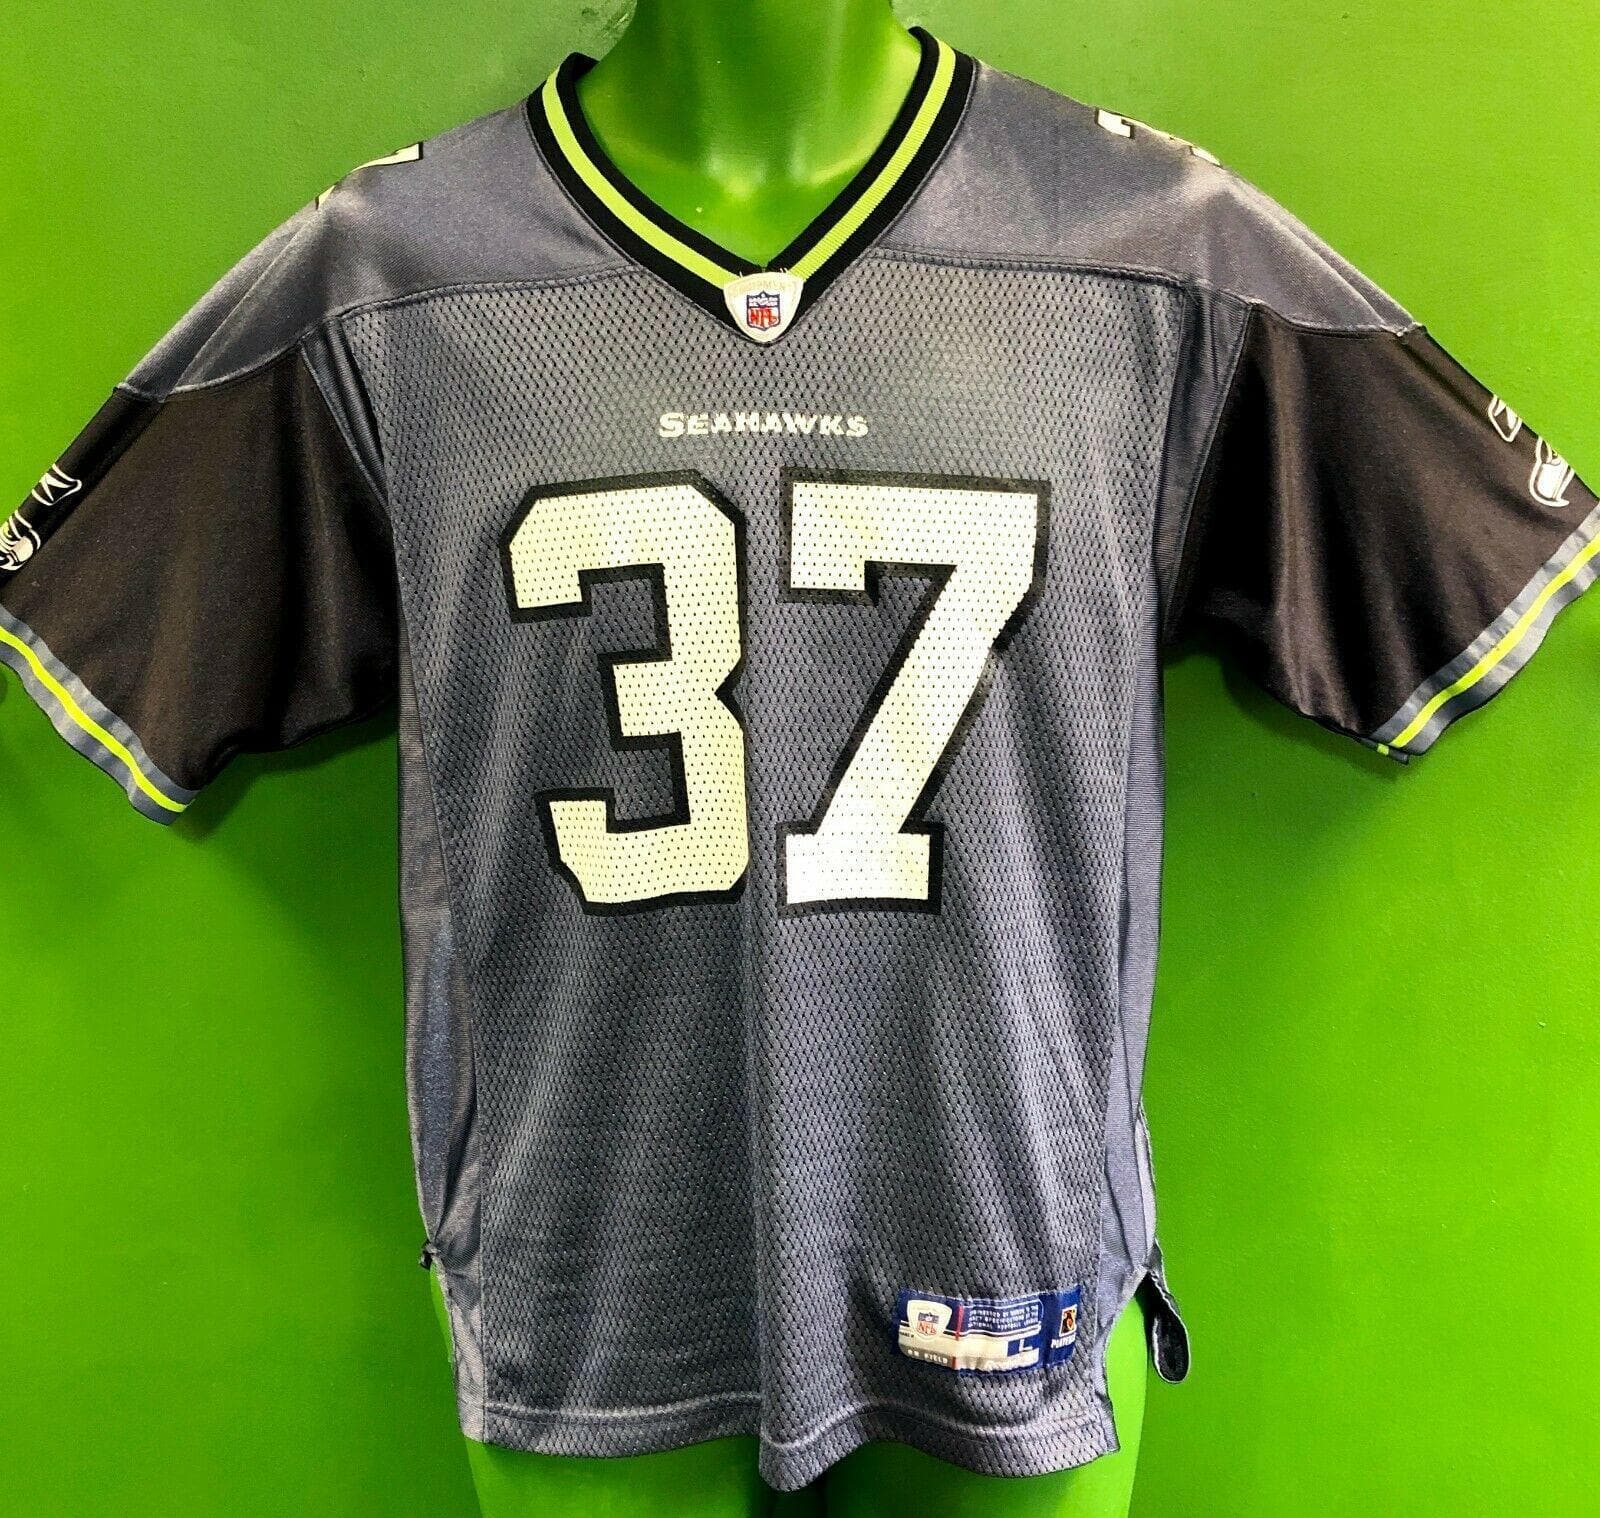 NFL Seattle Seahawks Shaun Alexander #37 Jersey Youth Large